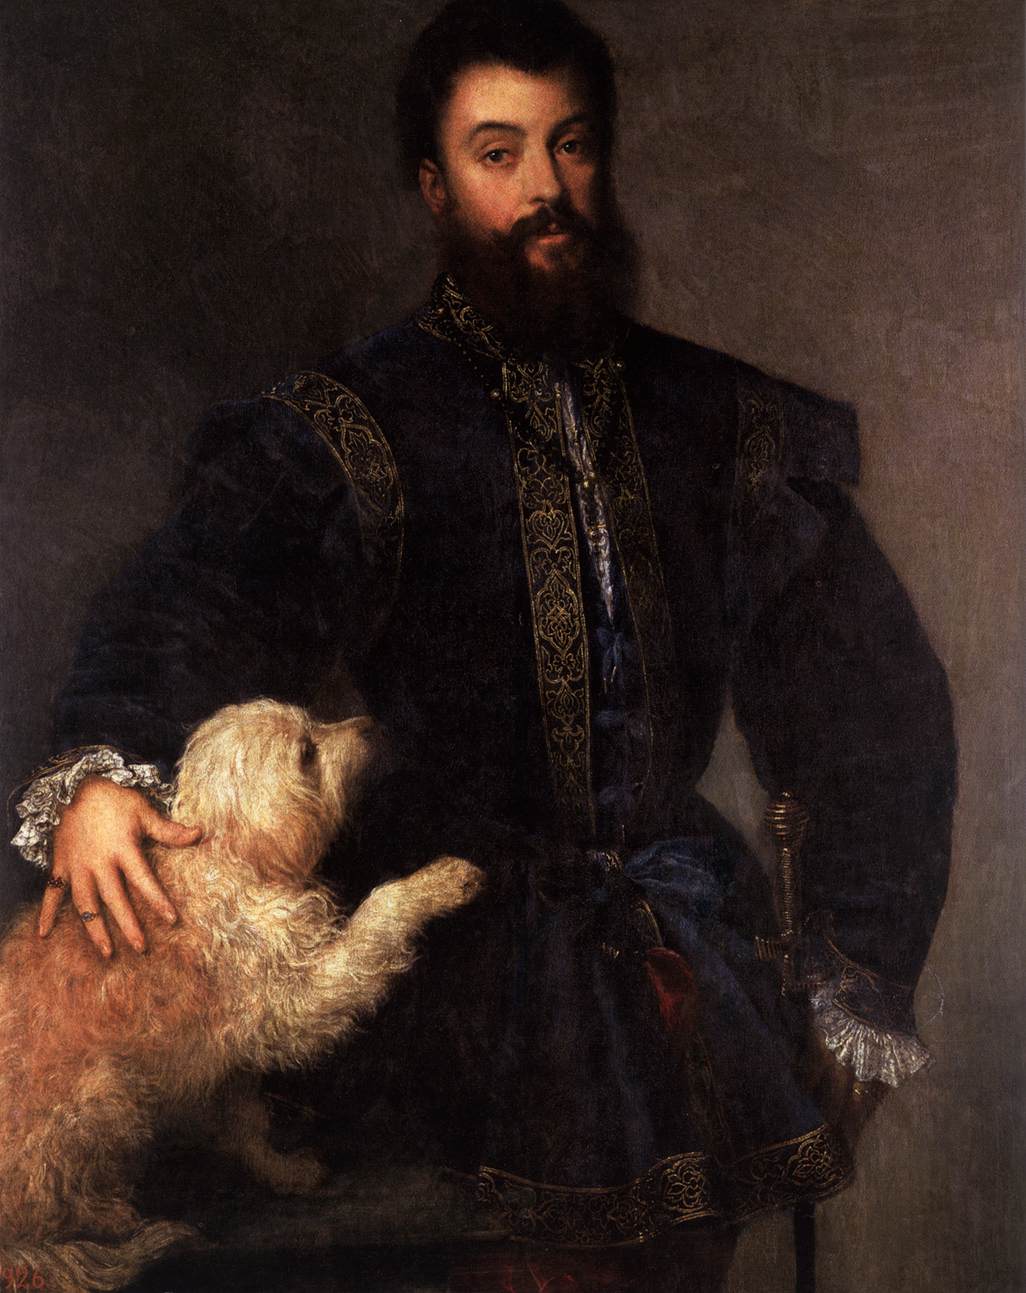 Тициан. Портрет Федерико II Гонзага, герцога мантуанского. 1529